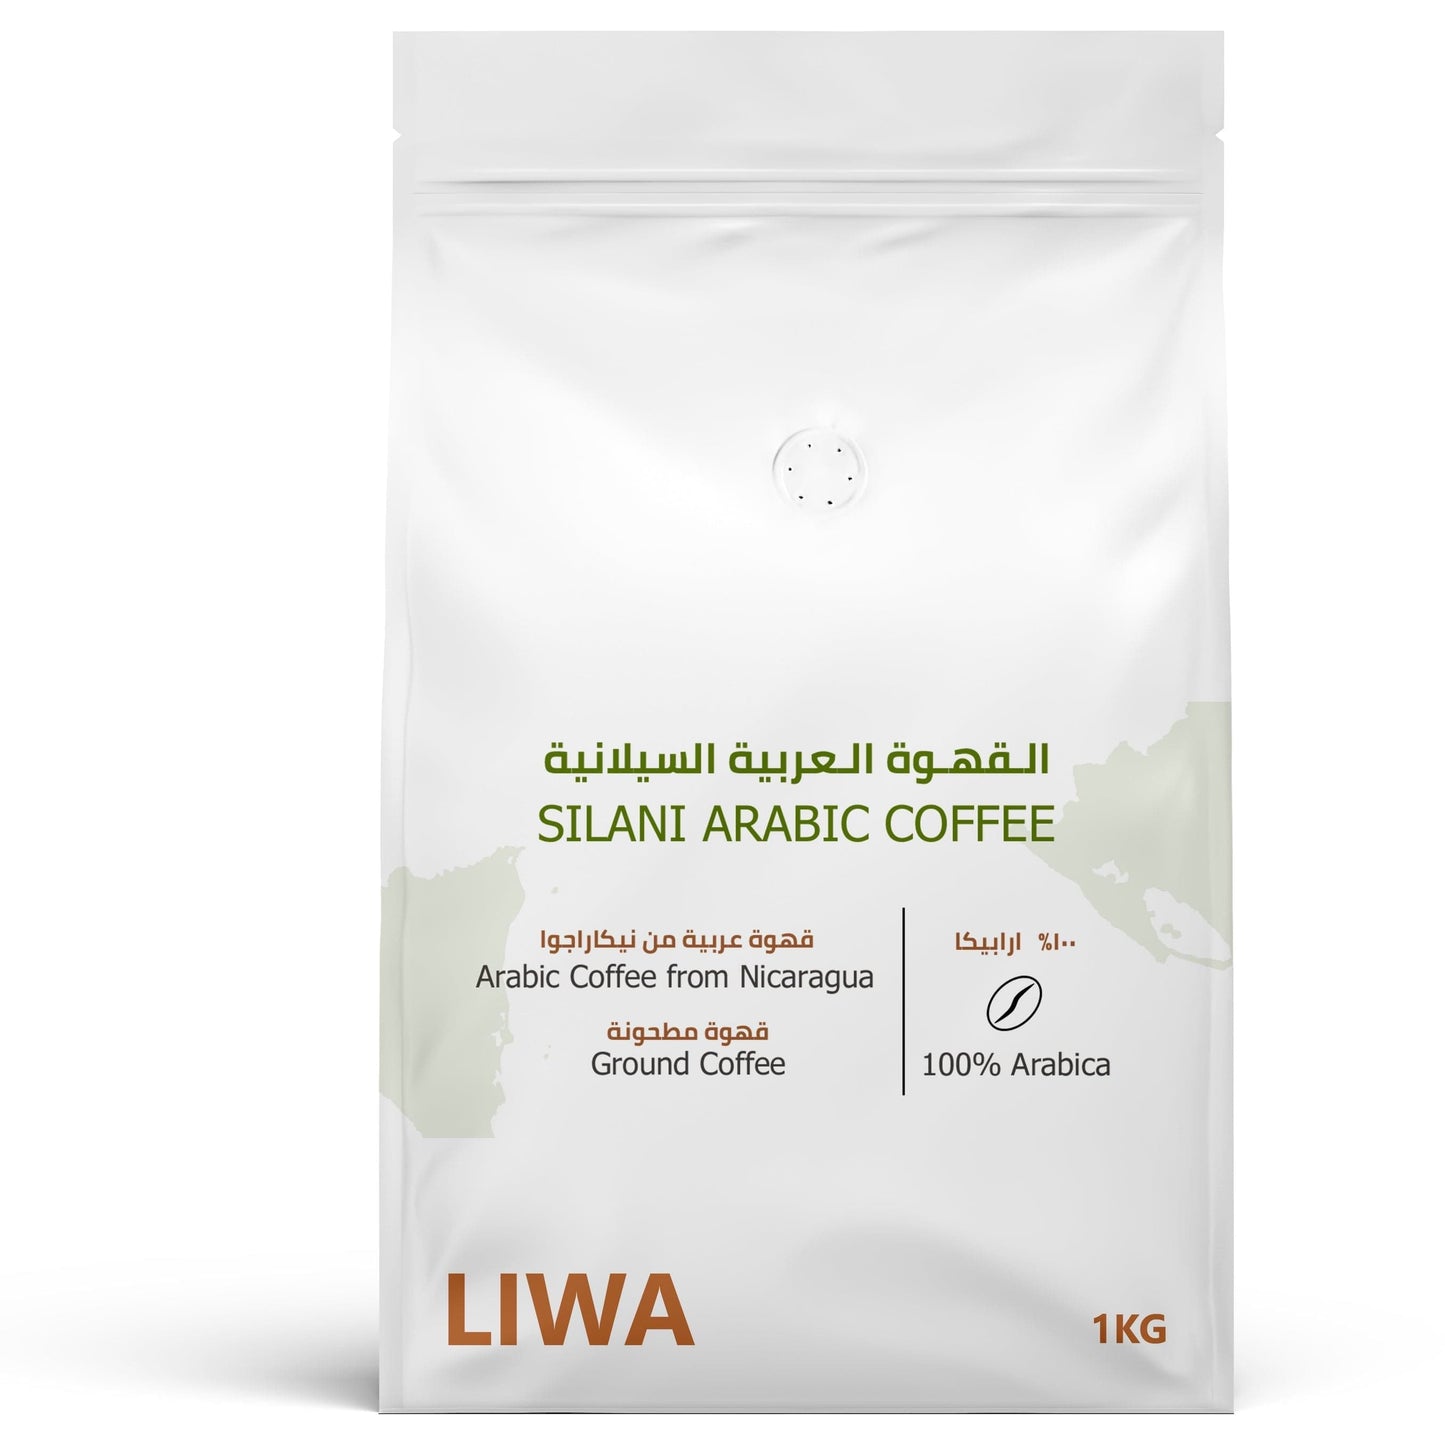 Silani Arabic Coffee (Nicaragua) - Premium Arabic Coffee from Liwa Coffee Roastery - Just Dhs. 29! Shop now at Liwa Coffee Roastery